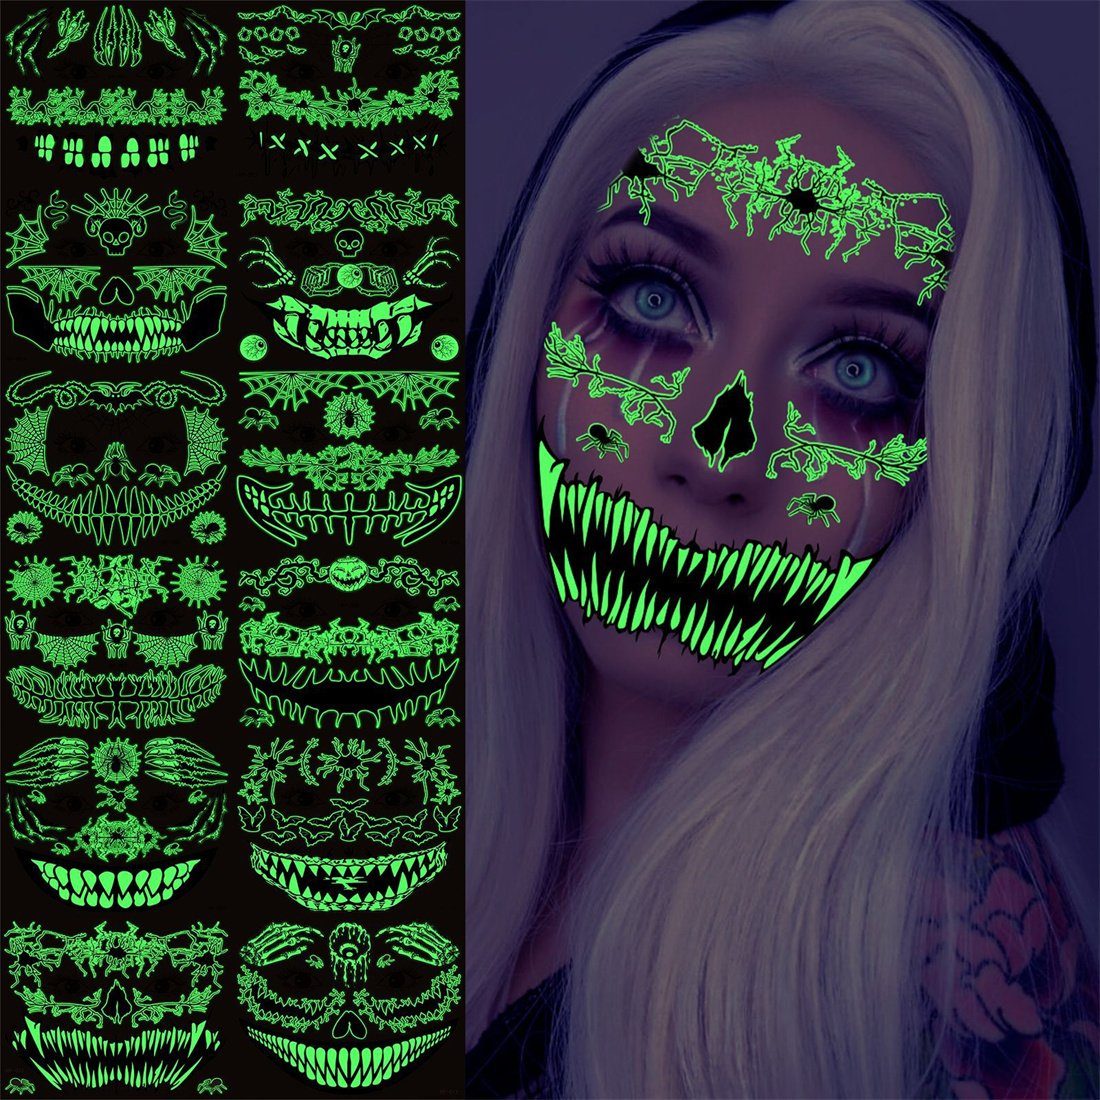 DÖRÖY Schmuck-Tattoo 12 Halloween Glow-in-the-Dark Tattoo Aufkleber,Horror Tattoo Aufkleber